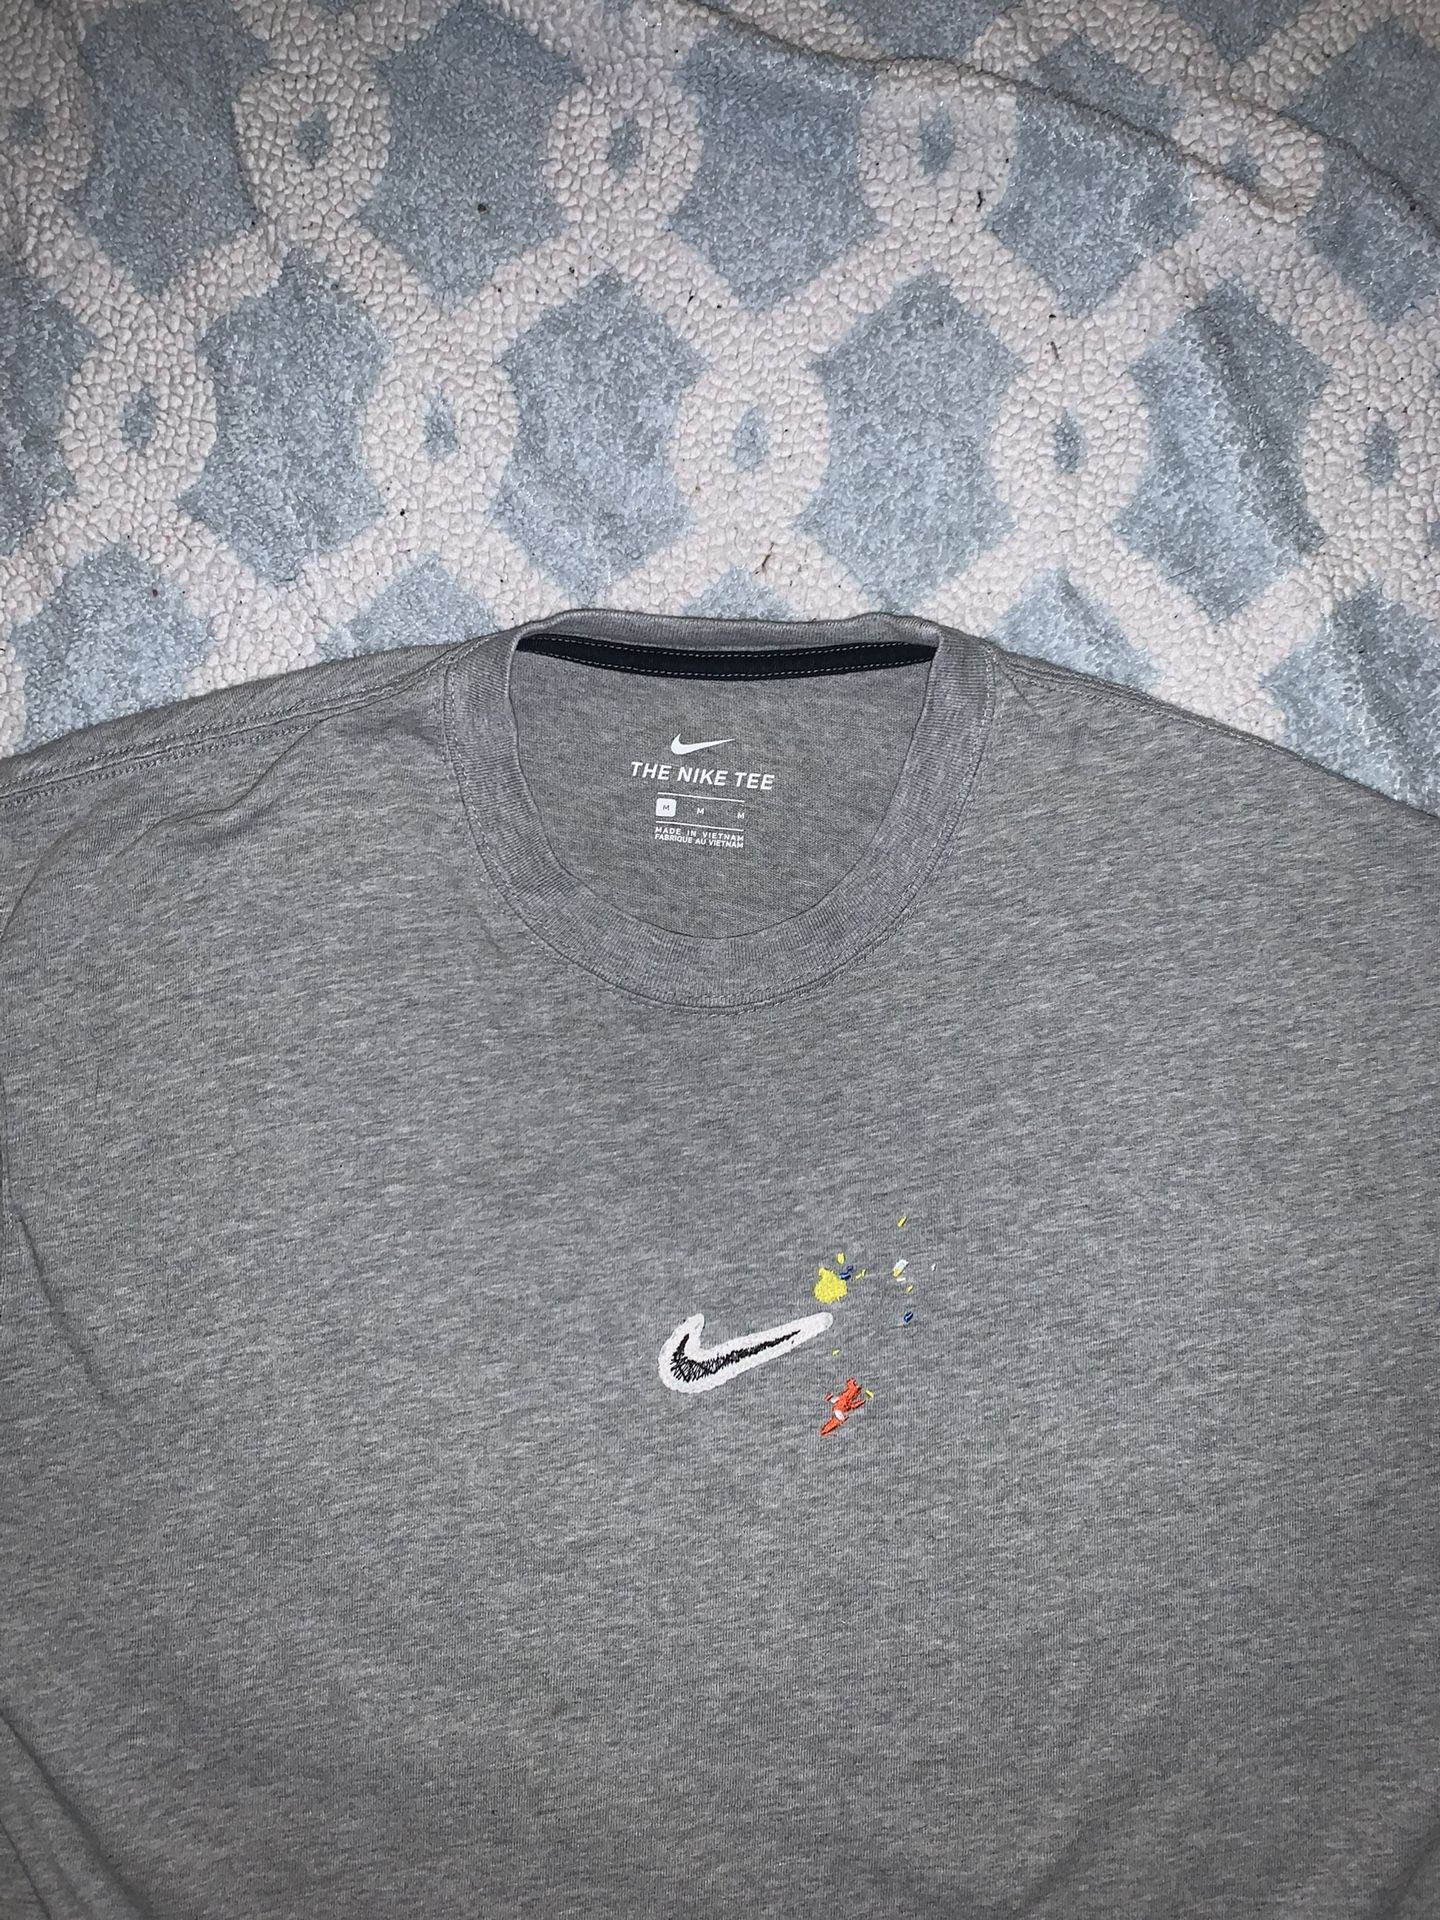 RETRO VINTAGE Nike Short Sleeve Shirt Retro Paint Splatter